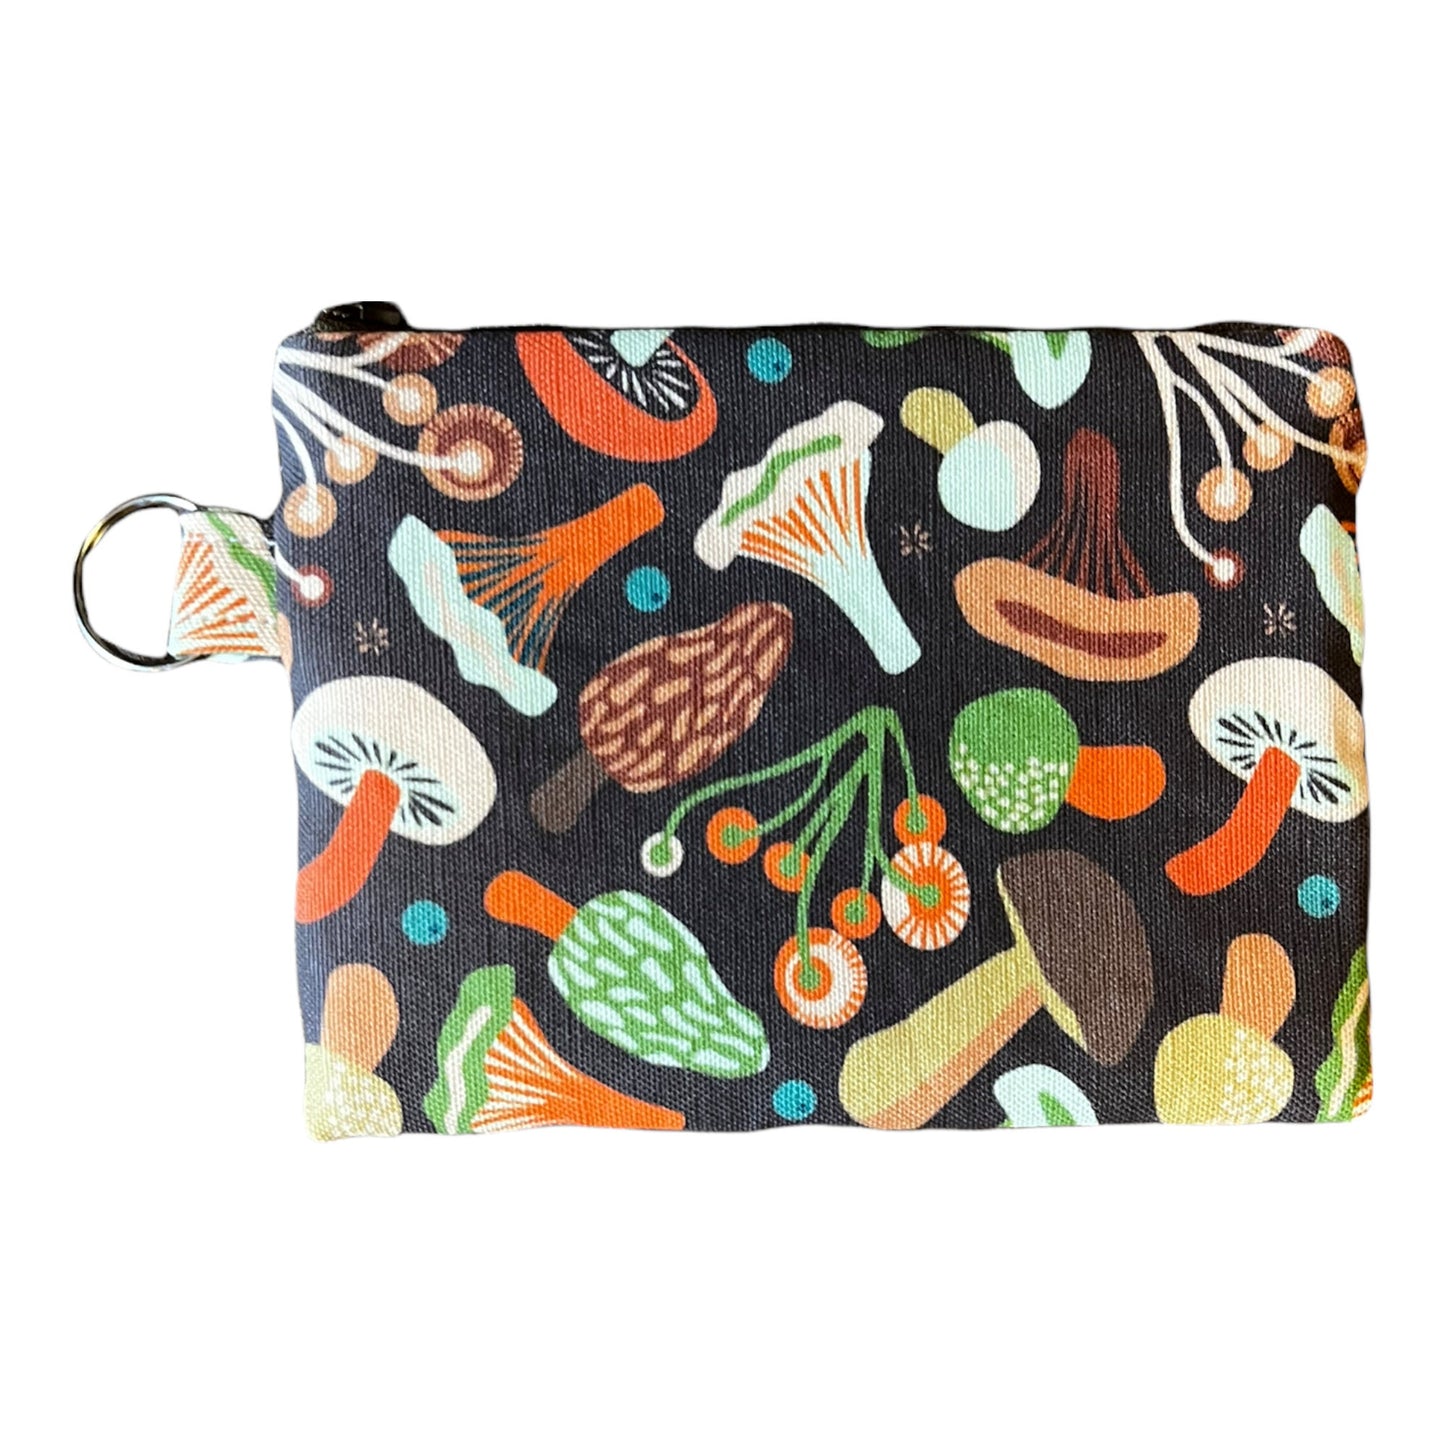 Kawaii mushroom coin purse. Made with artisan linen cotton fabric, 6" x 4.5"